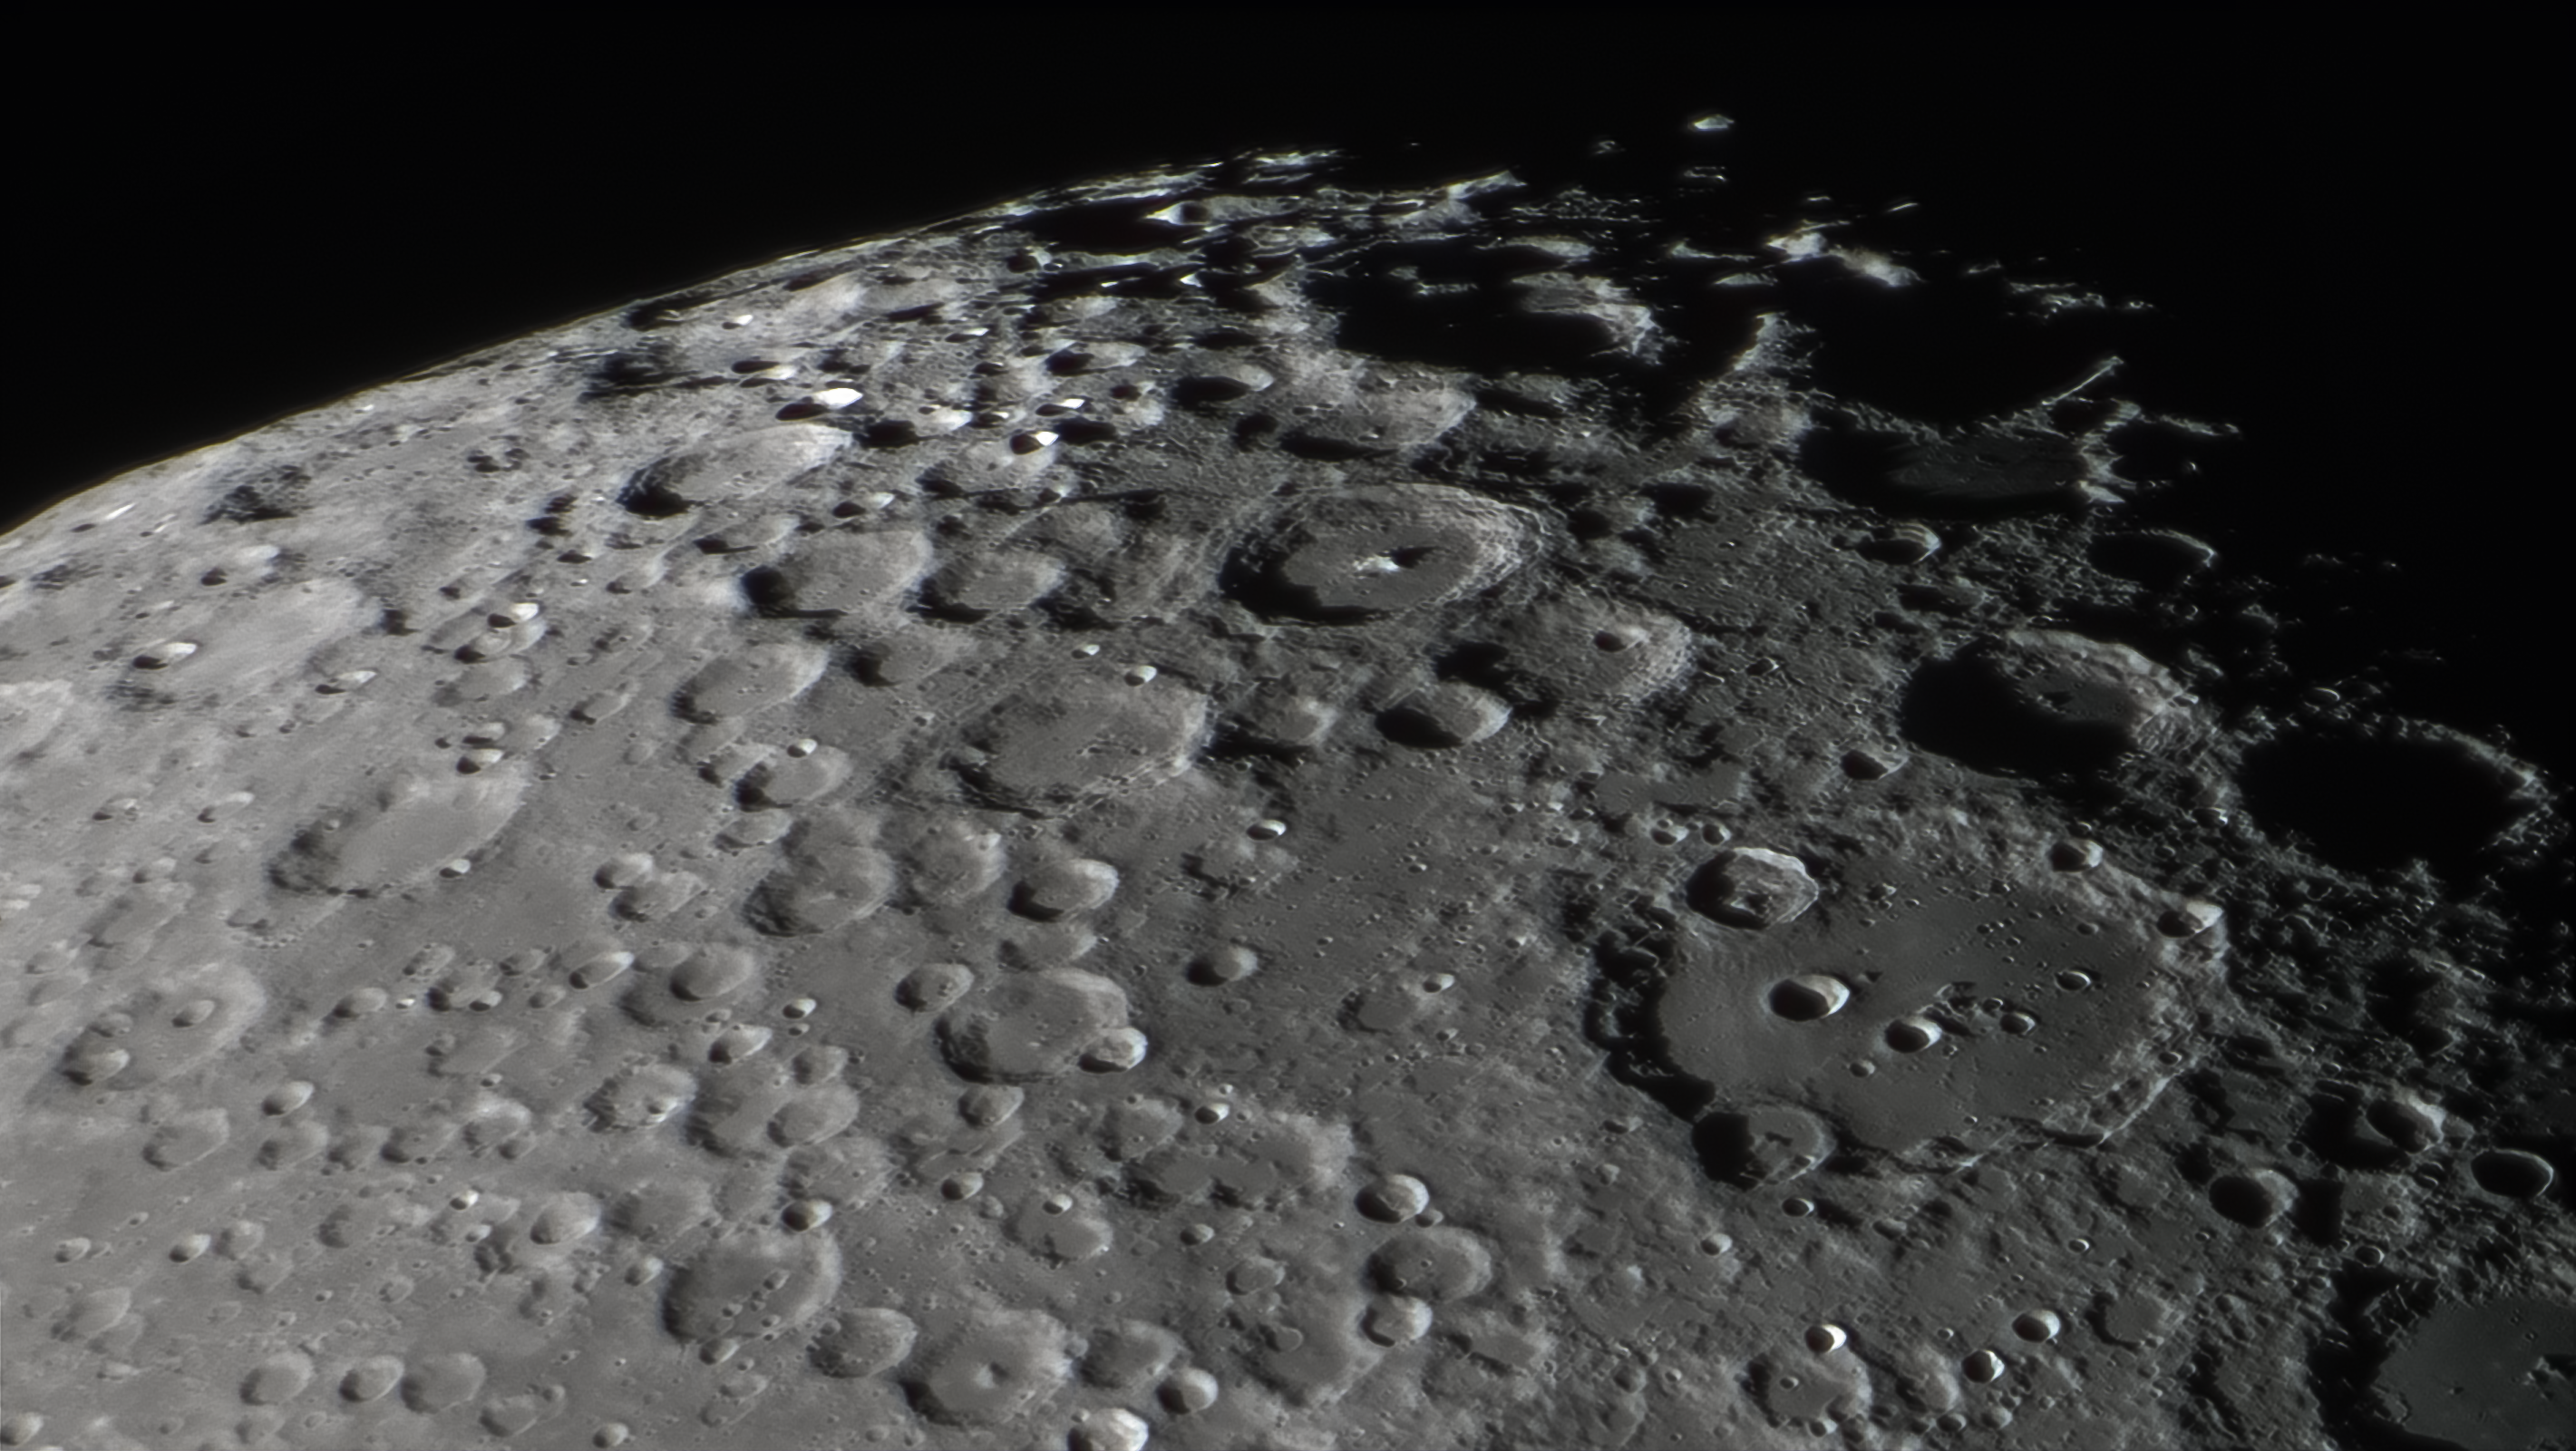 Луна 13 12. Кратер Клавиус. Кратер Клавий на Луне. Фото Луны высокого разрешения на рабочий стол. Луна Астрофото кратер тихо.